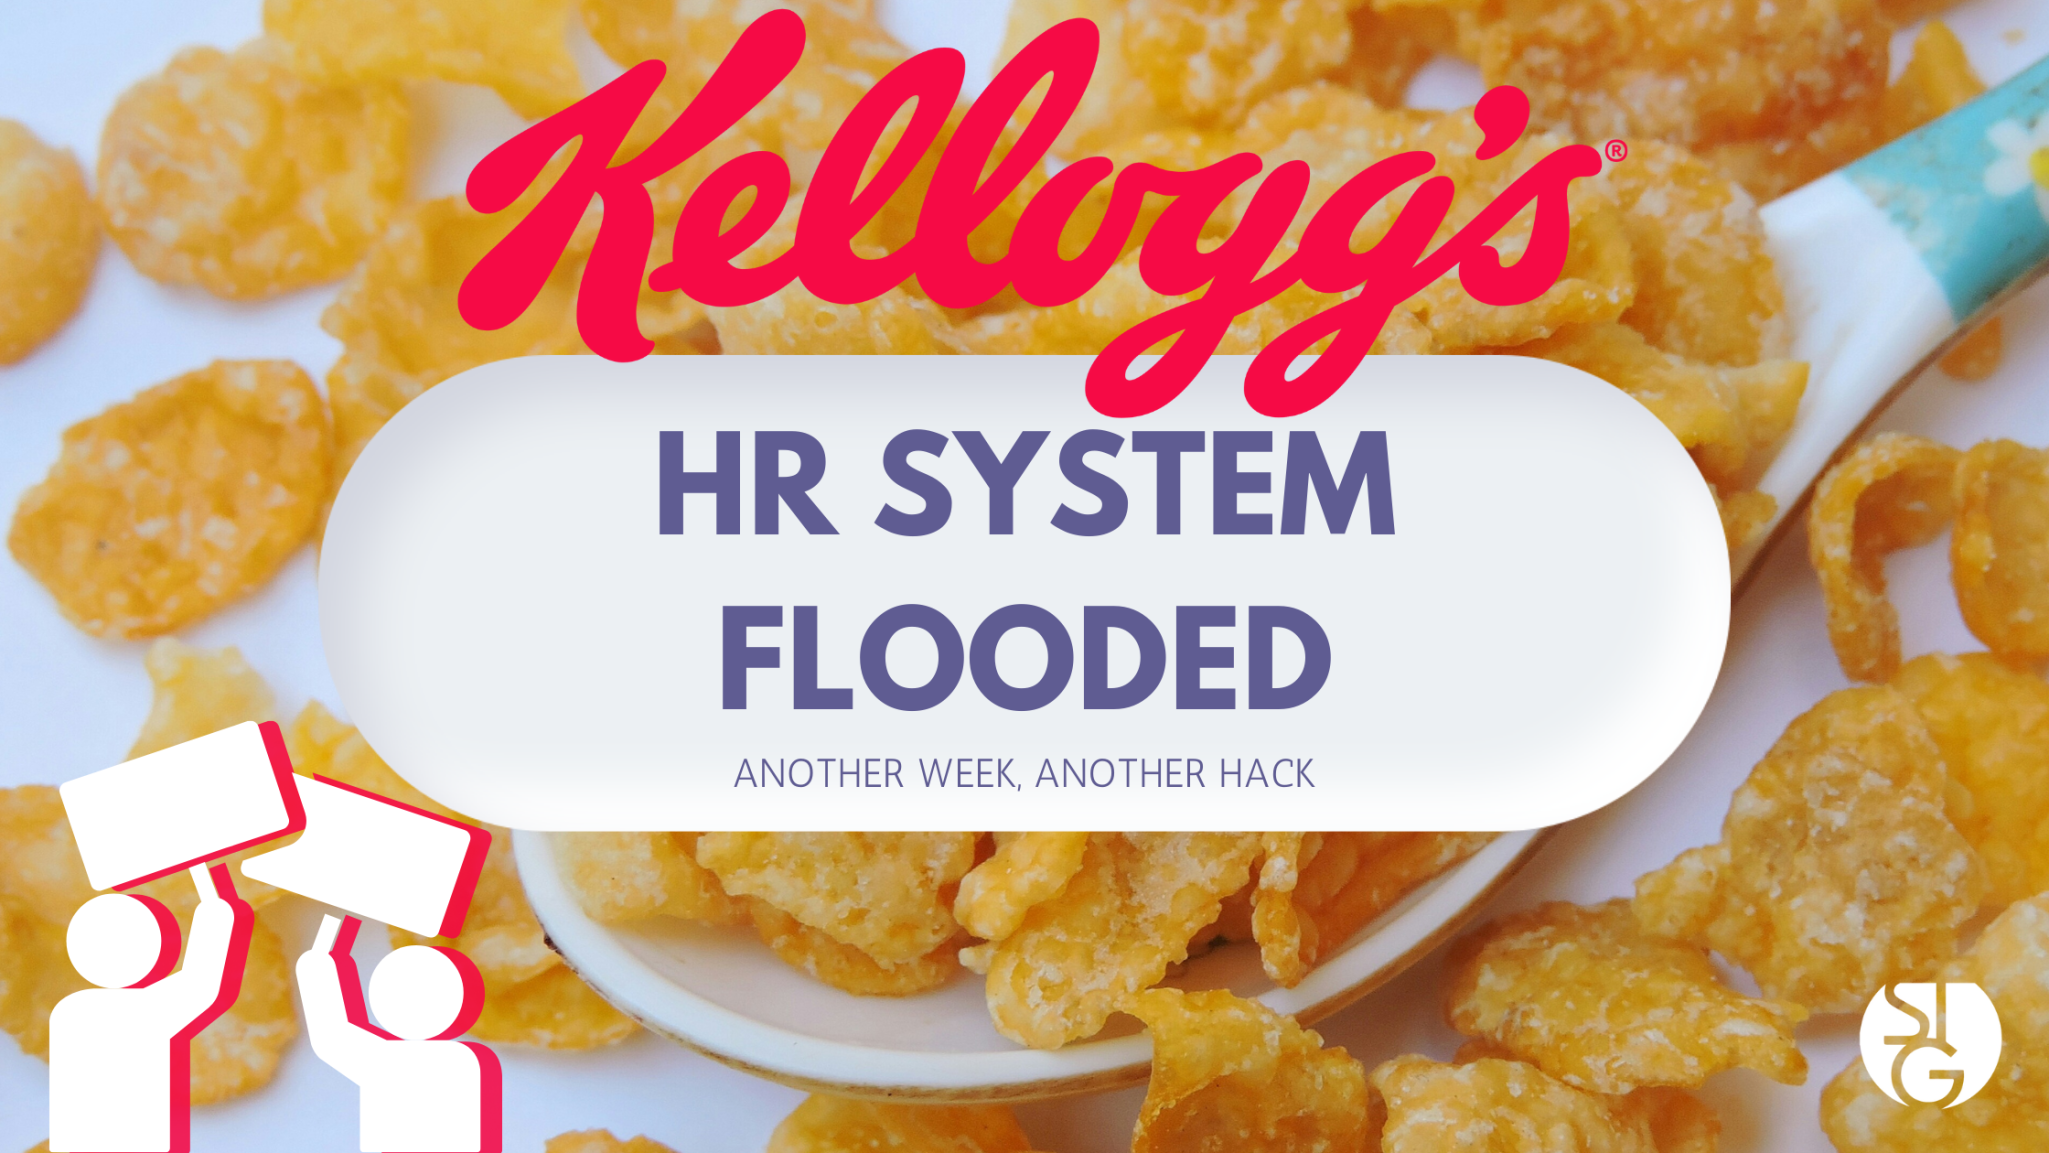 AWAH- Kellogg's HR System Flooded